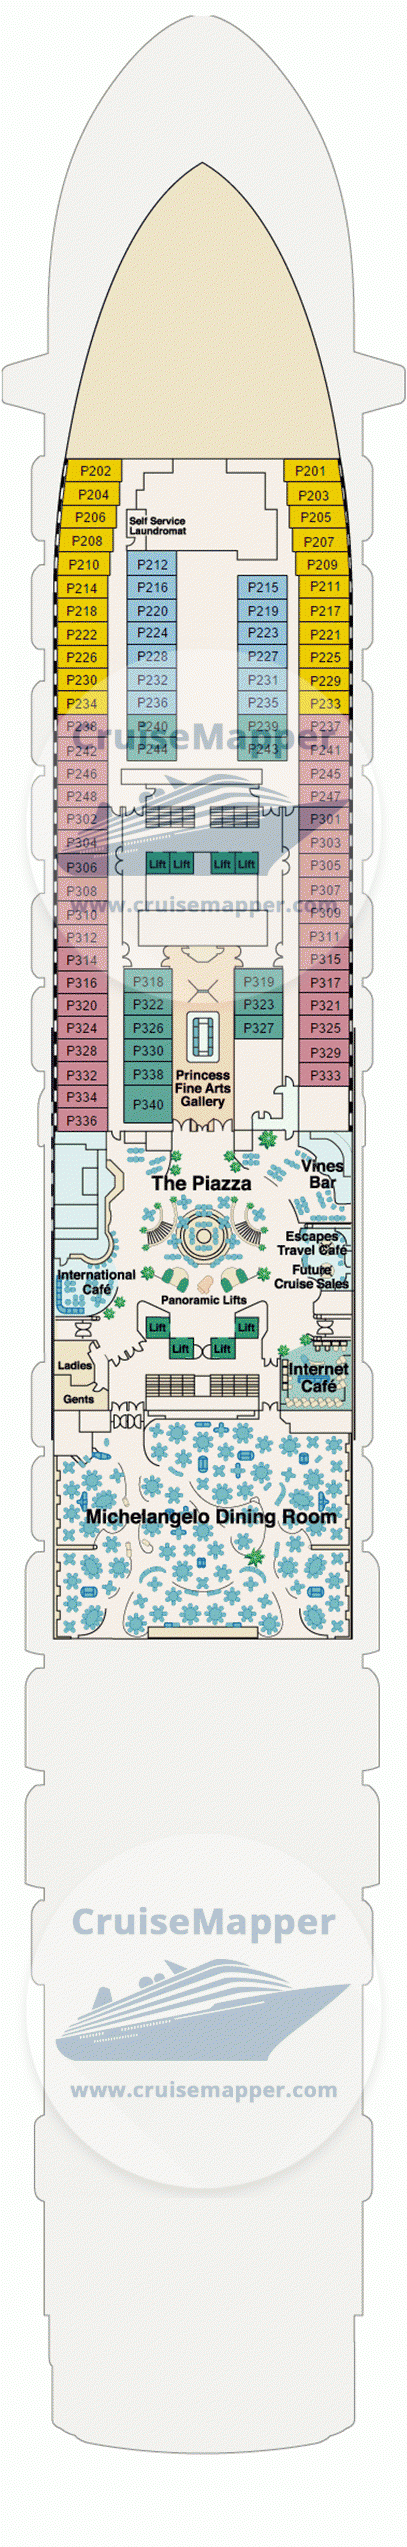 Emerald Princess Deck 05 - Plaza-Cabins-Dining-Lobby